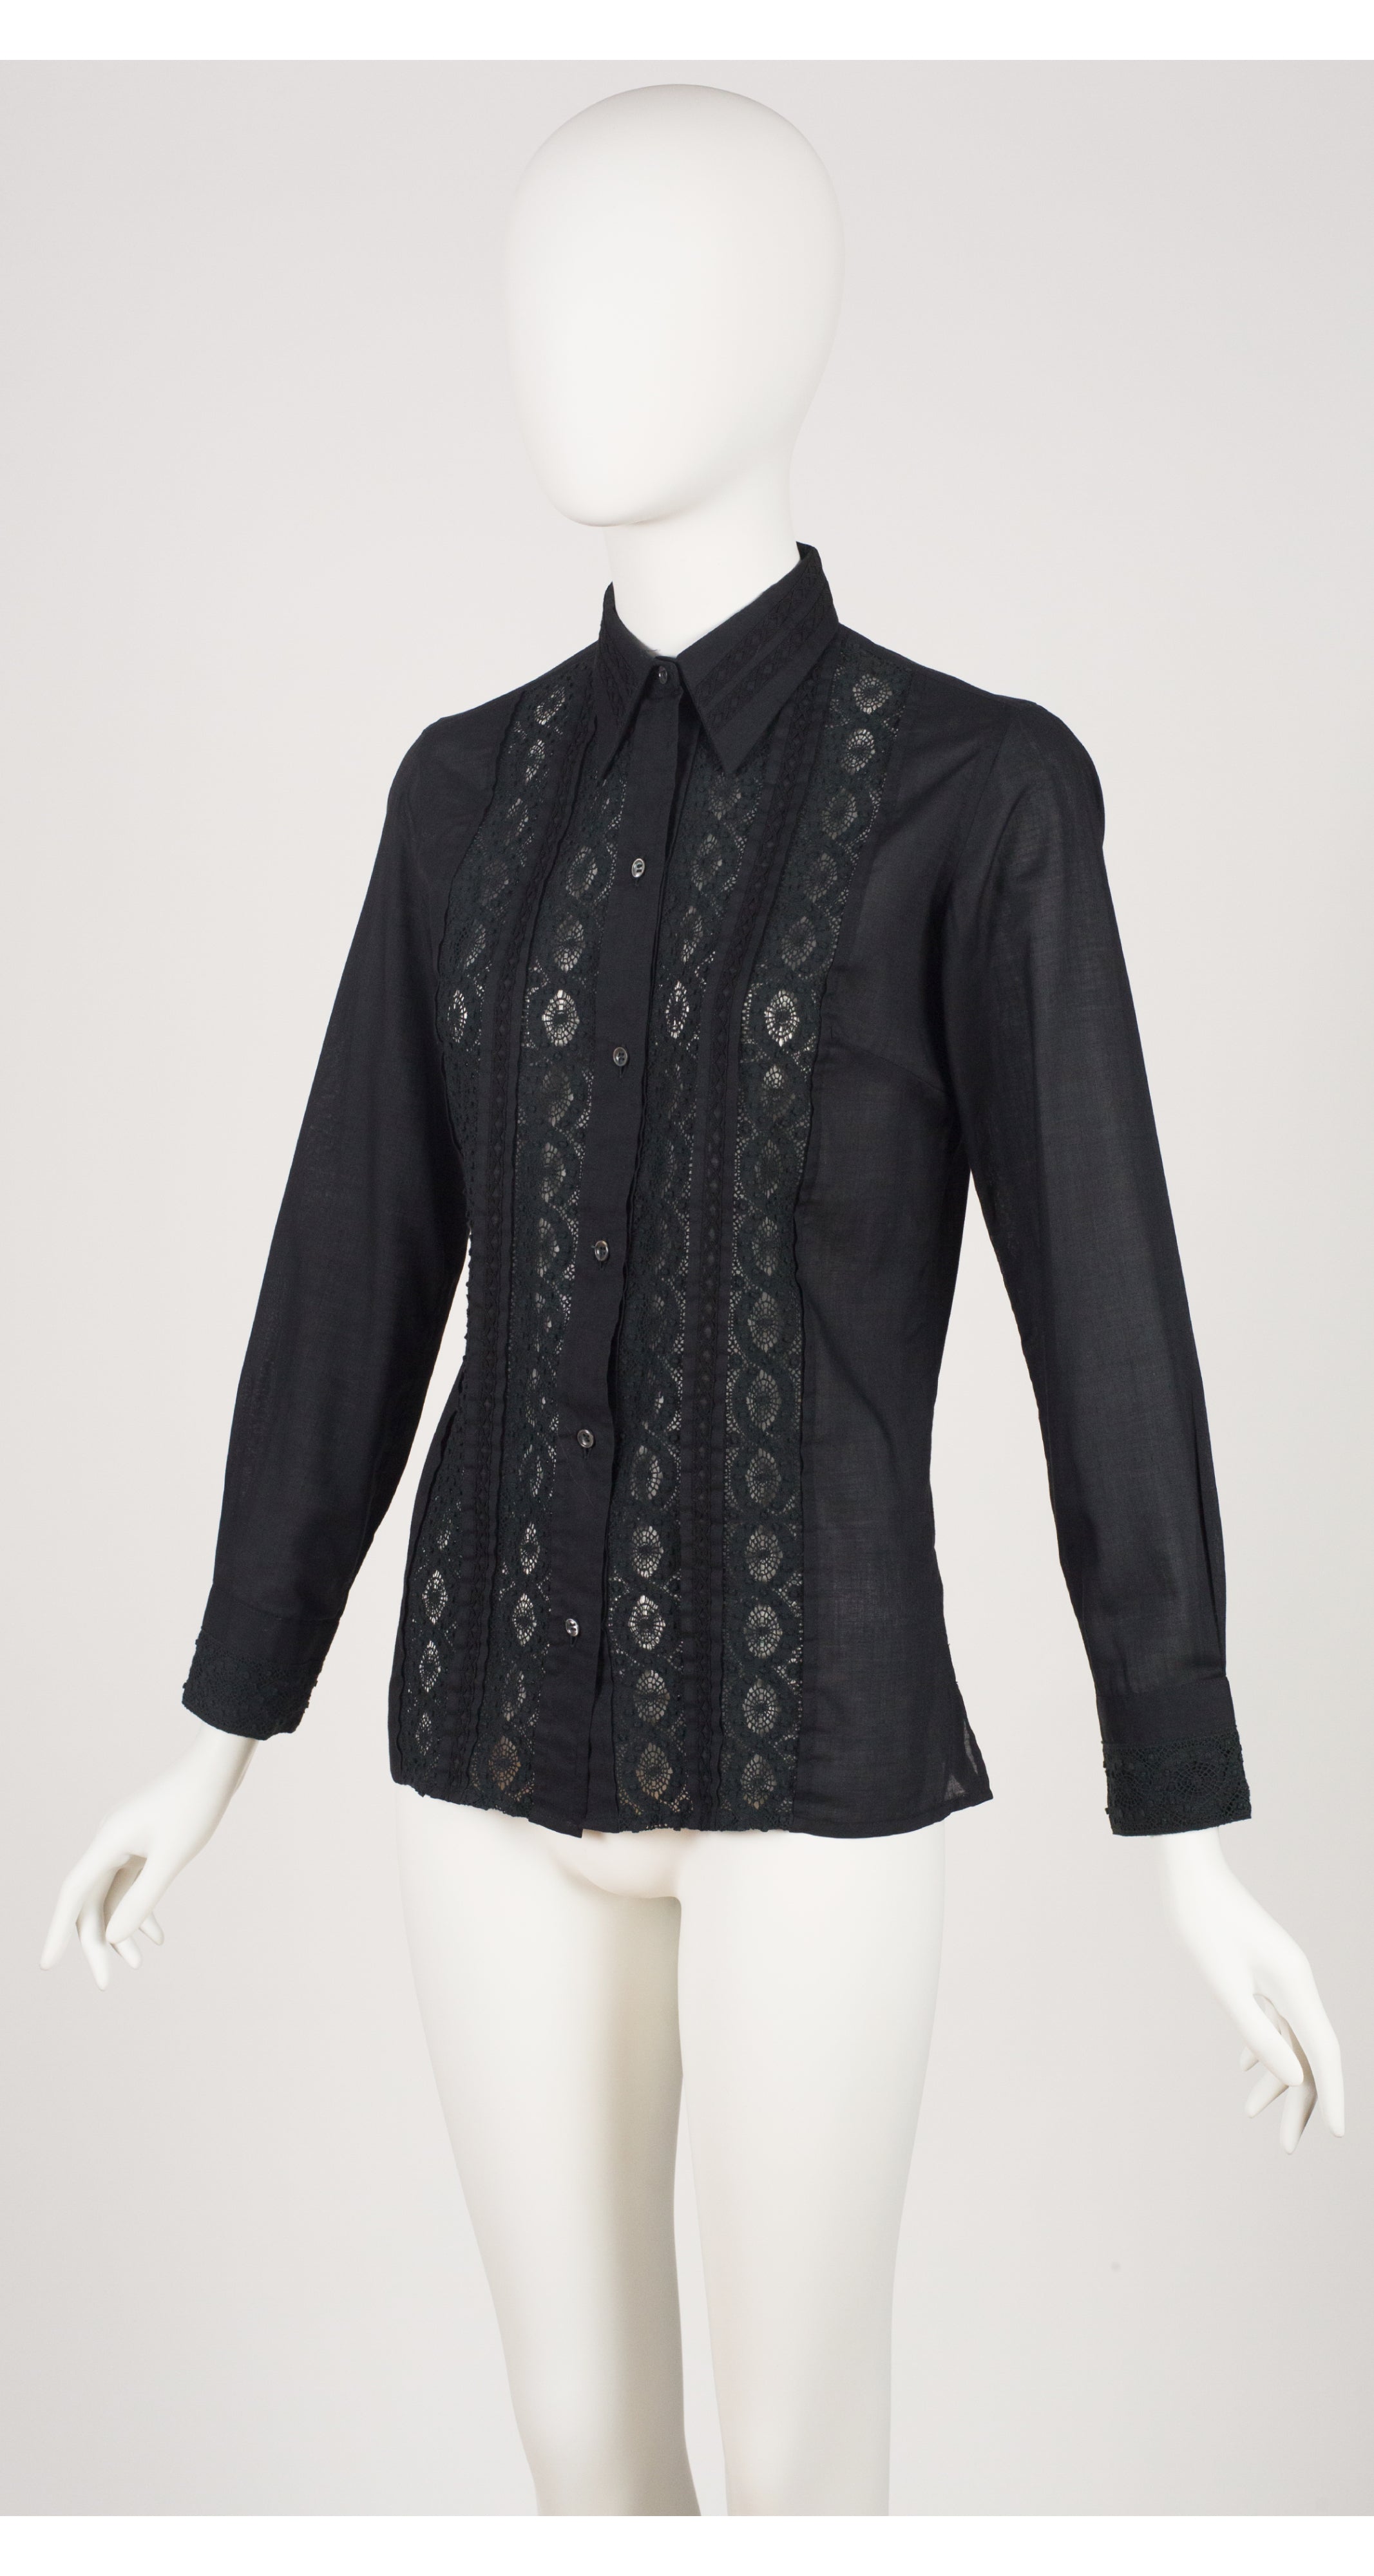 1970s Black Crochet Panel Collared Button Up Shirt